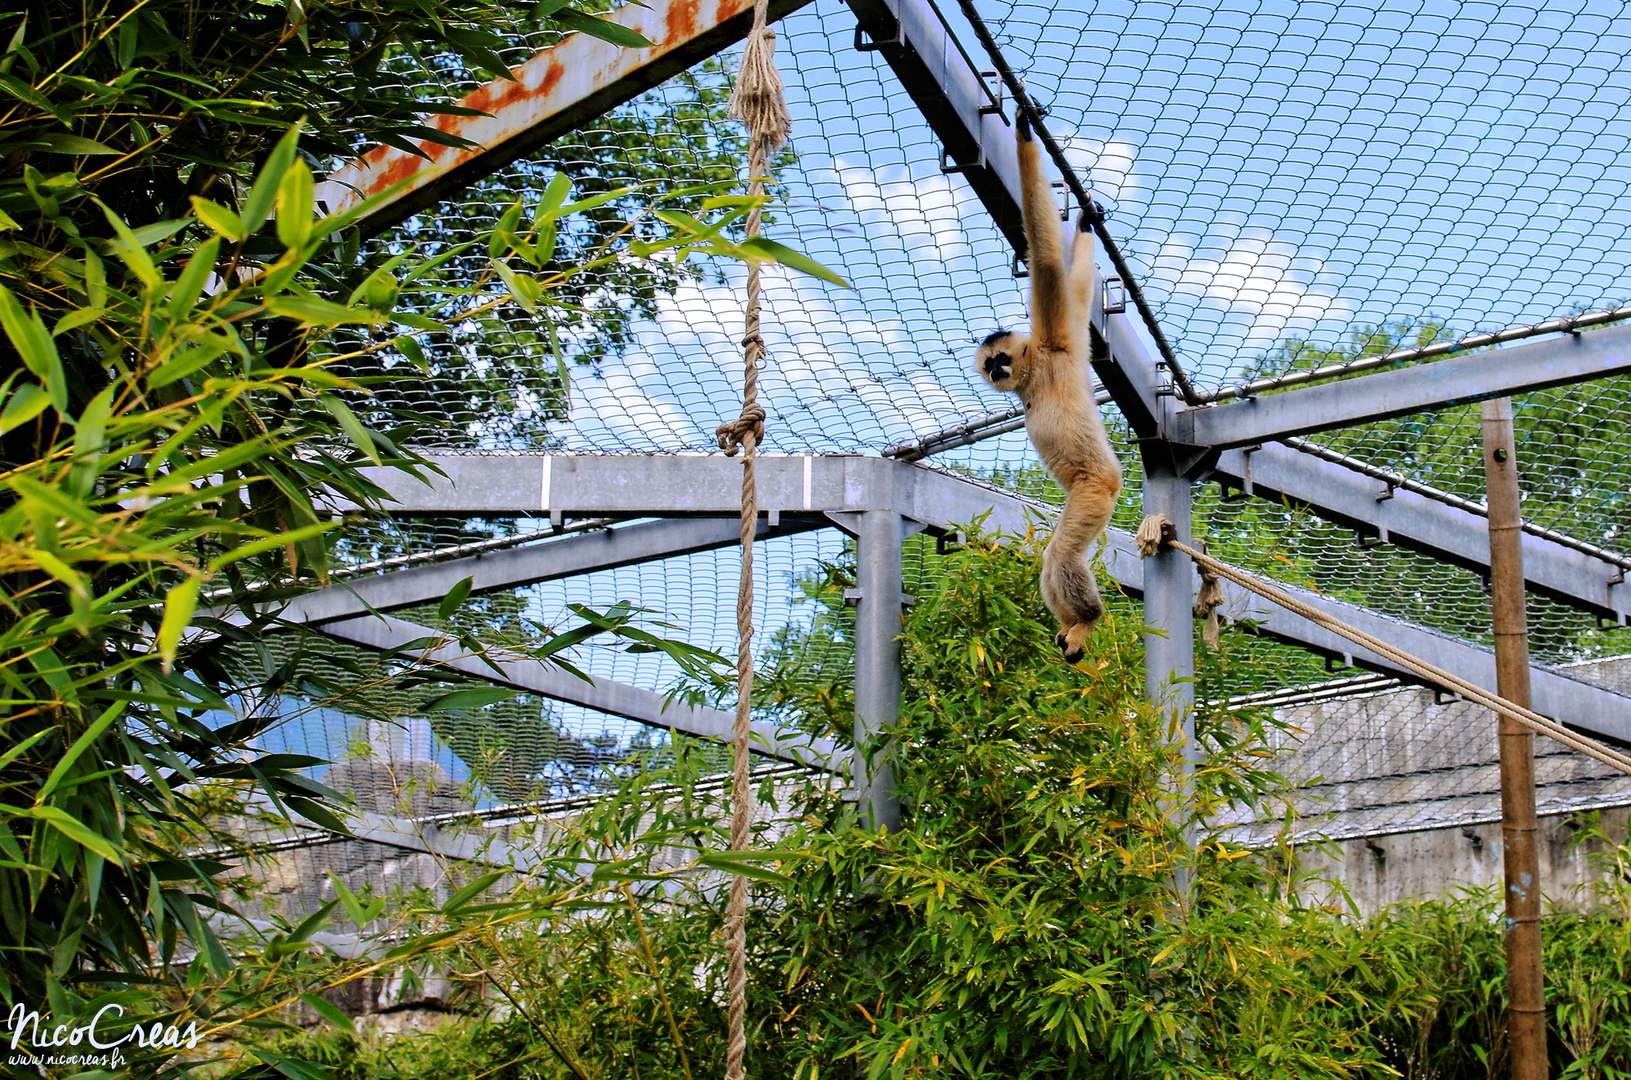 Gibbon à favoris blancs du Nord - ESC_0021_DxO.jpg